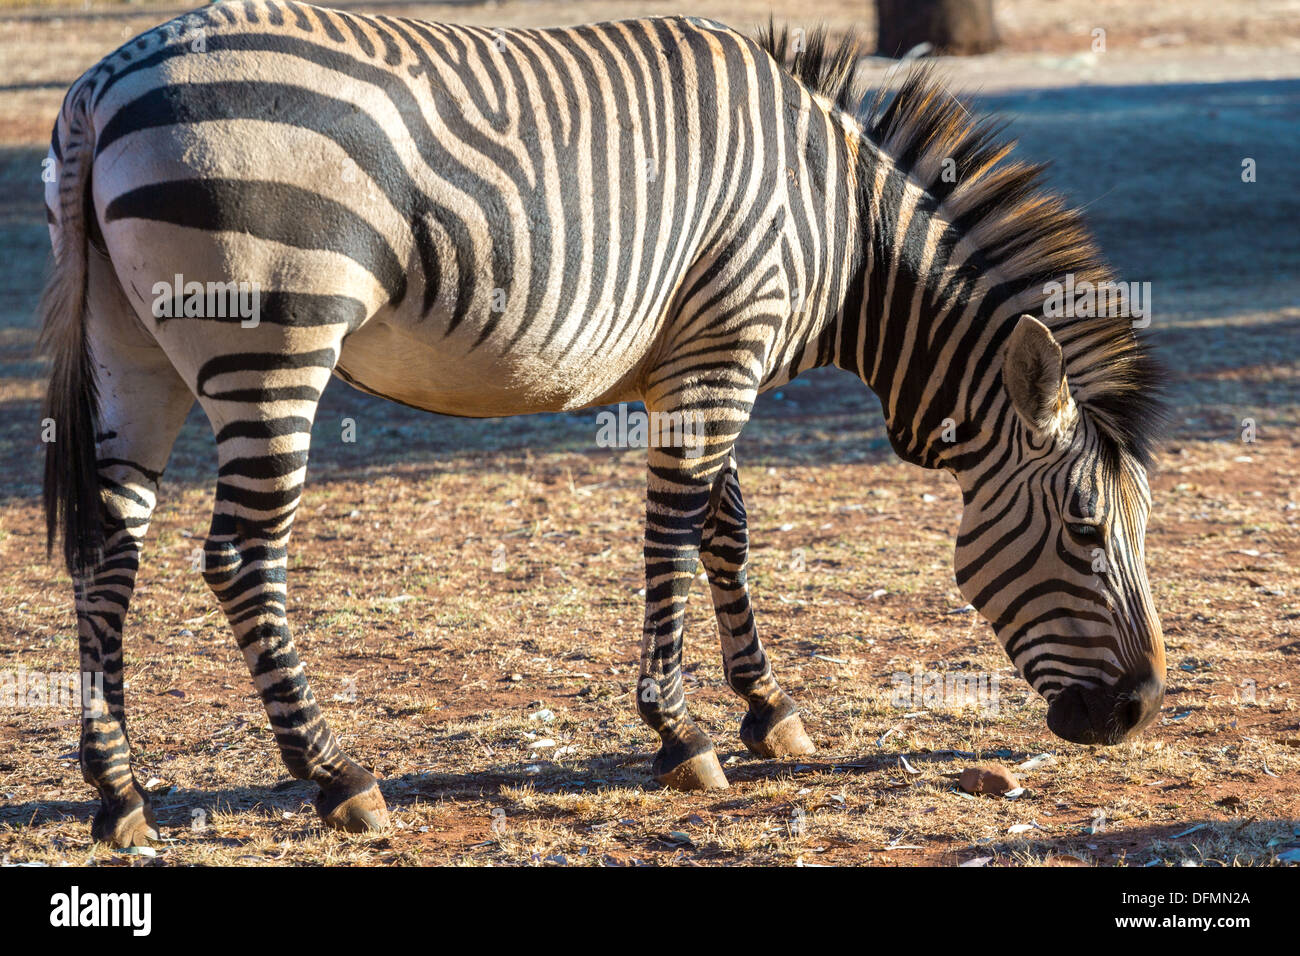 An adult zebra grazing on the dry grassland Stock Photo